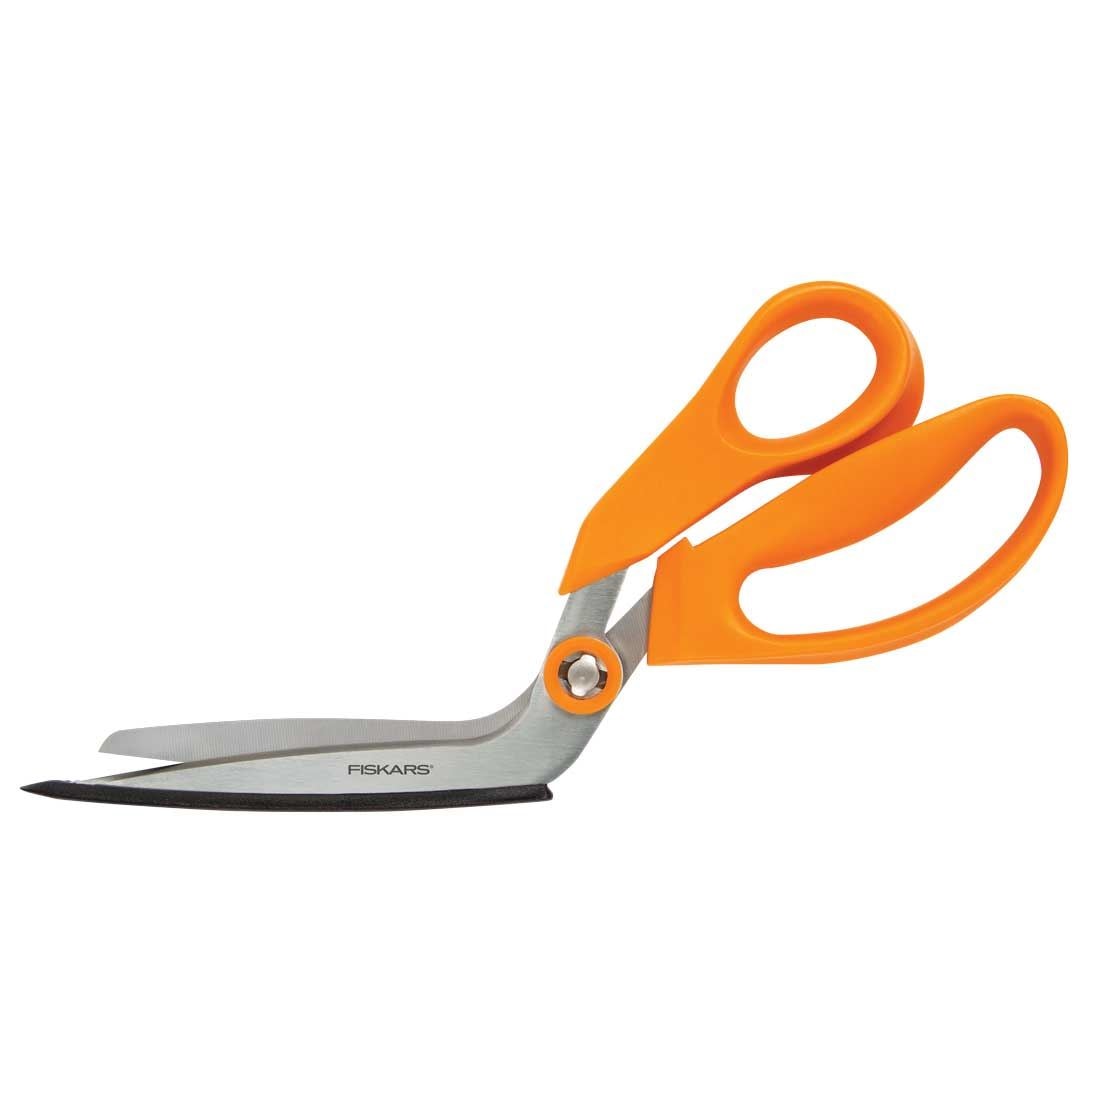 Fiskars KitchenSmart Essential kitchen scissors